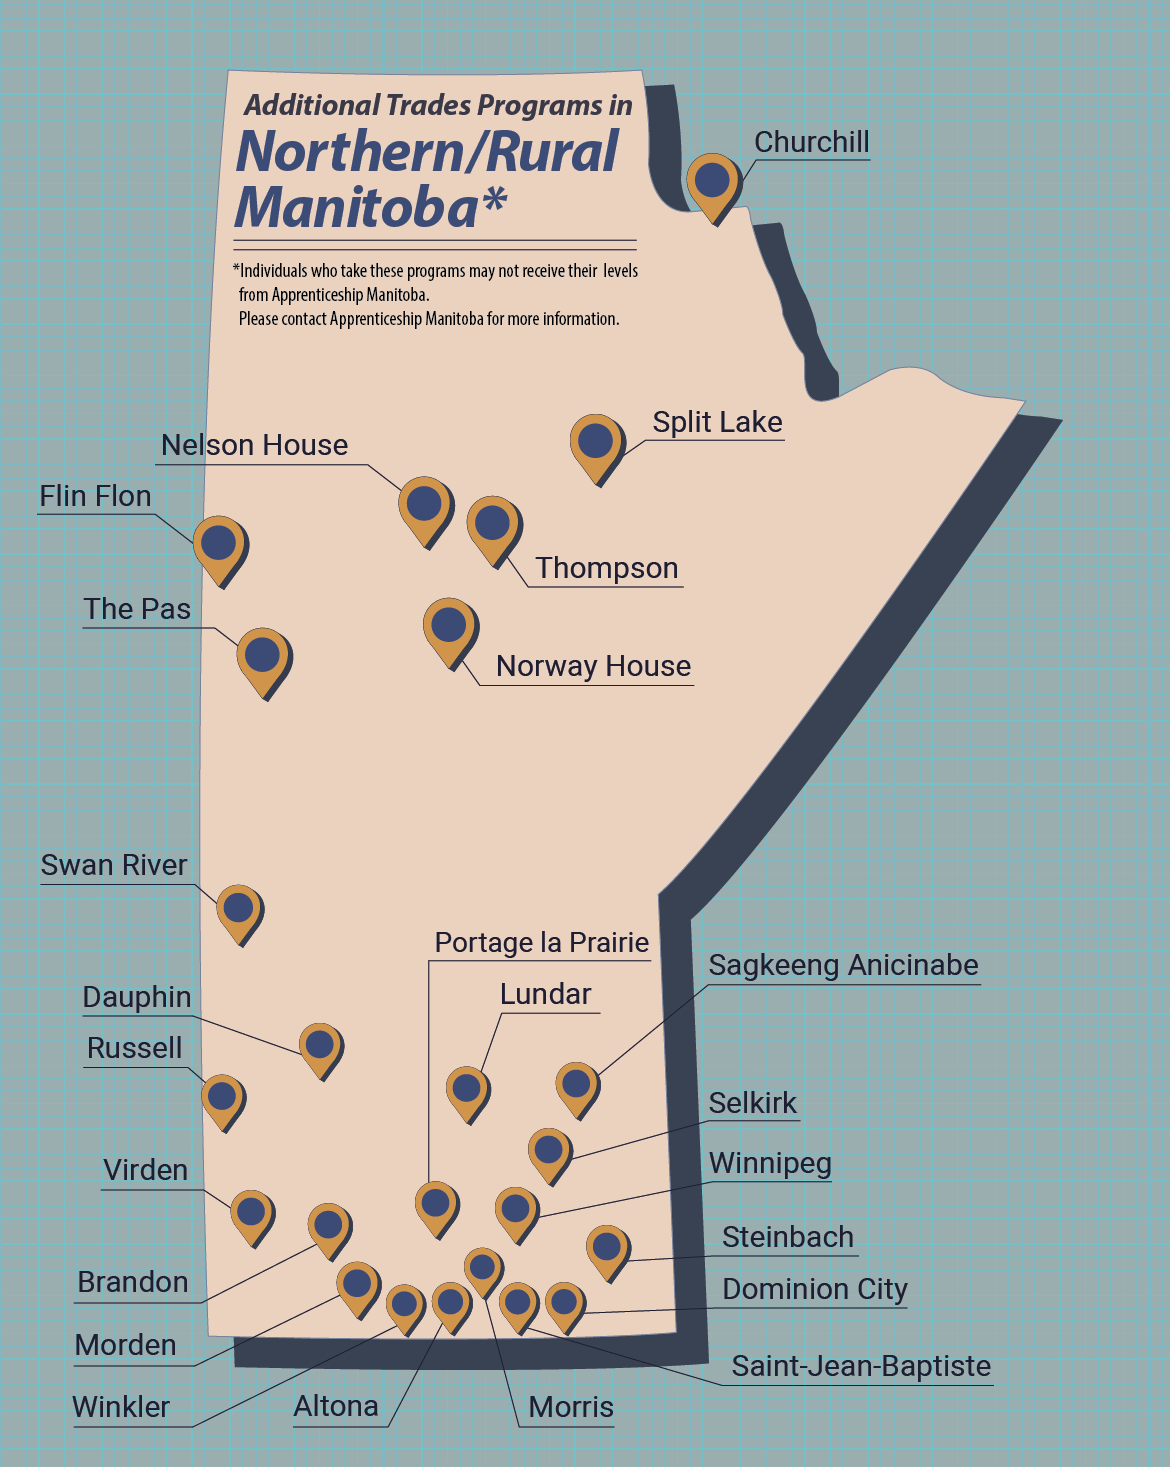 Additional Trades Programs in Northern/Rural Manitoba